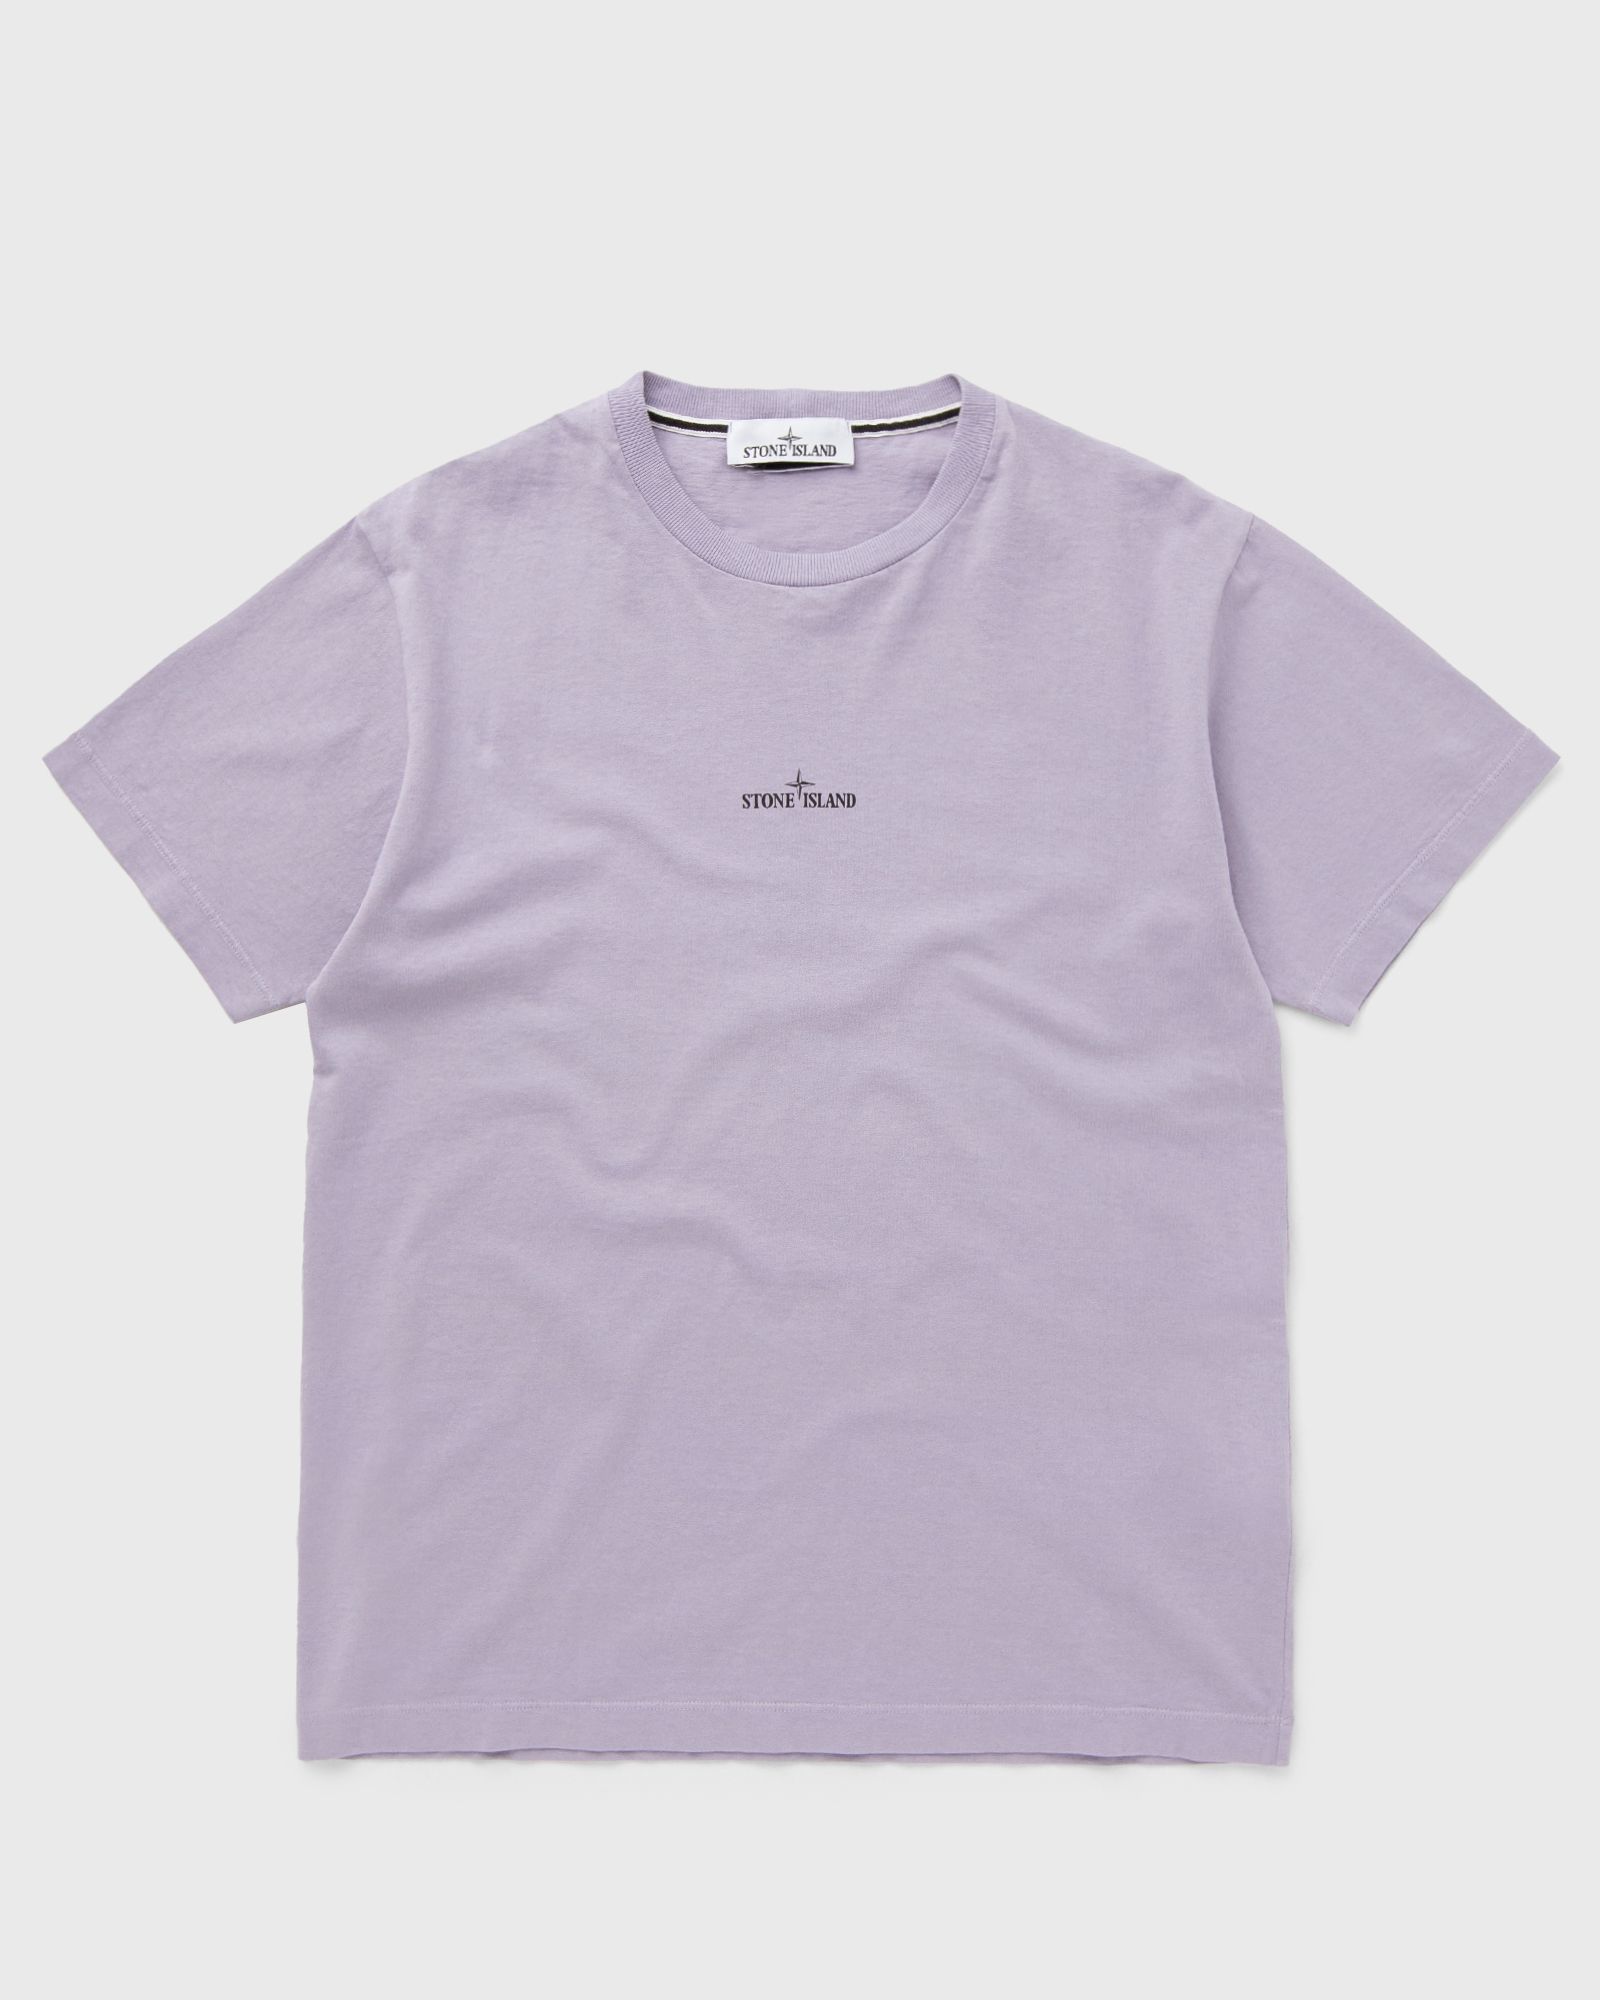 Stone Island - tee cotton jersey, 'stamp two' print, garment dyed men shortsleeves purple in größe:s